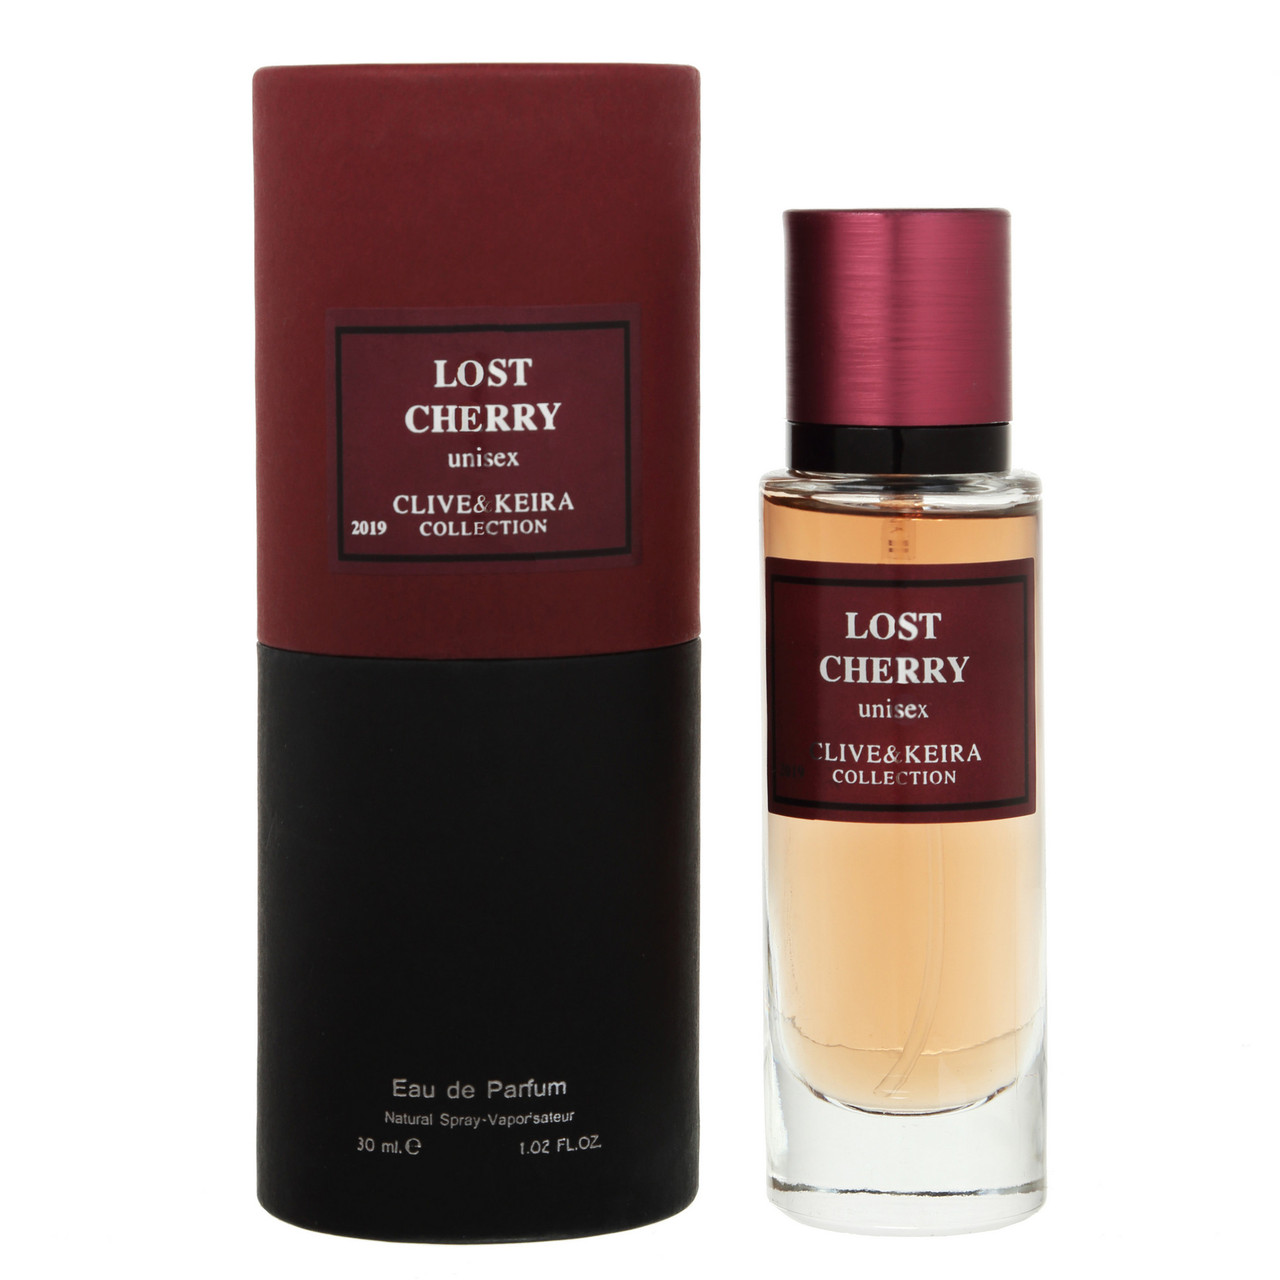 W 2019 парфуми ТМ CLIVE & KEIRA аналог аромату Cherry 30 мл